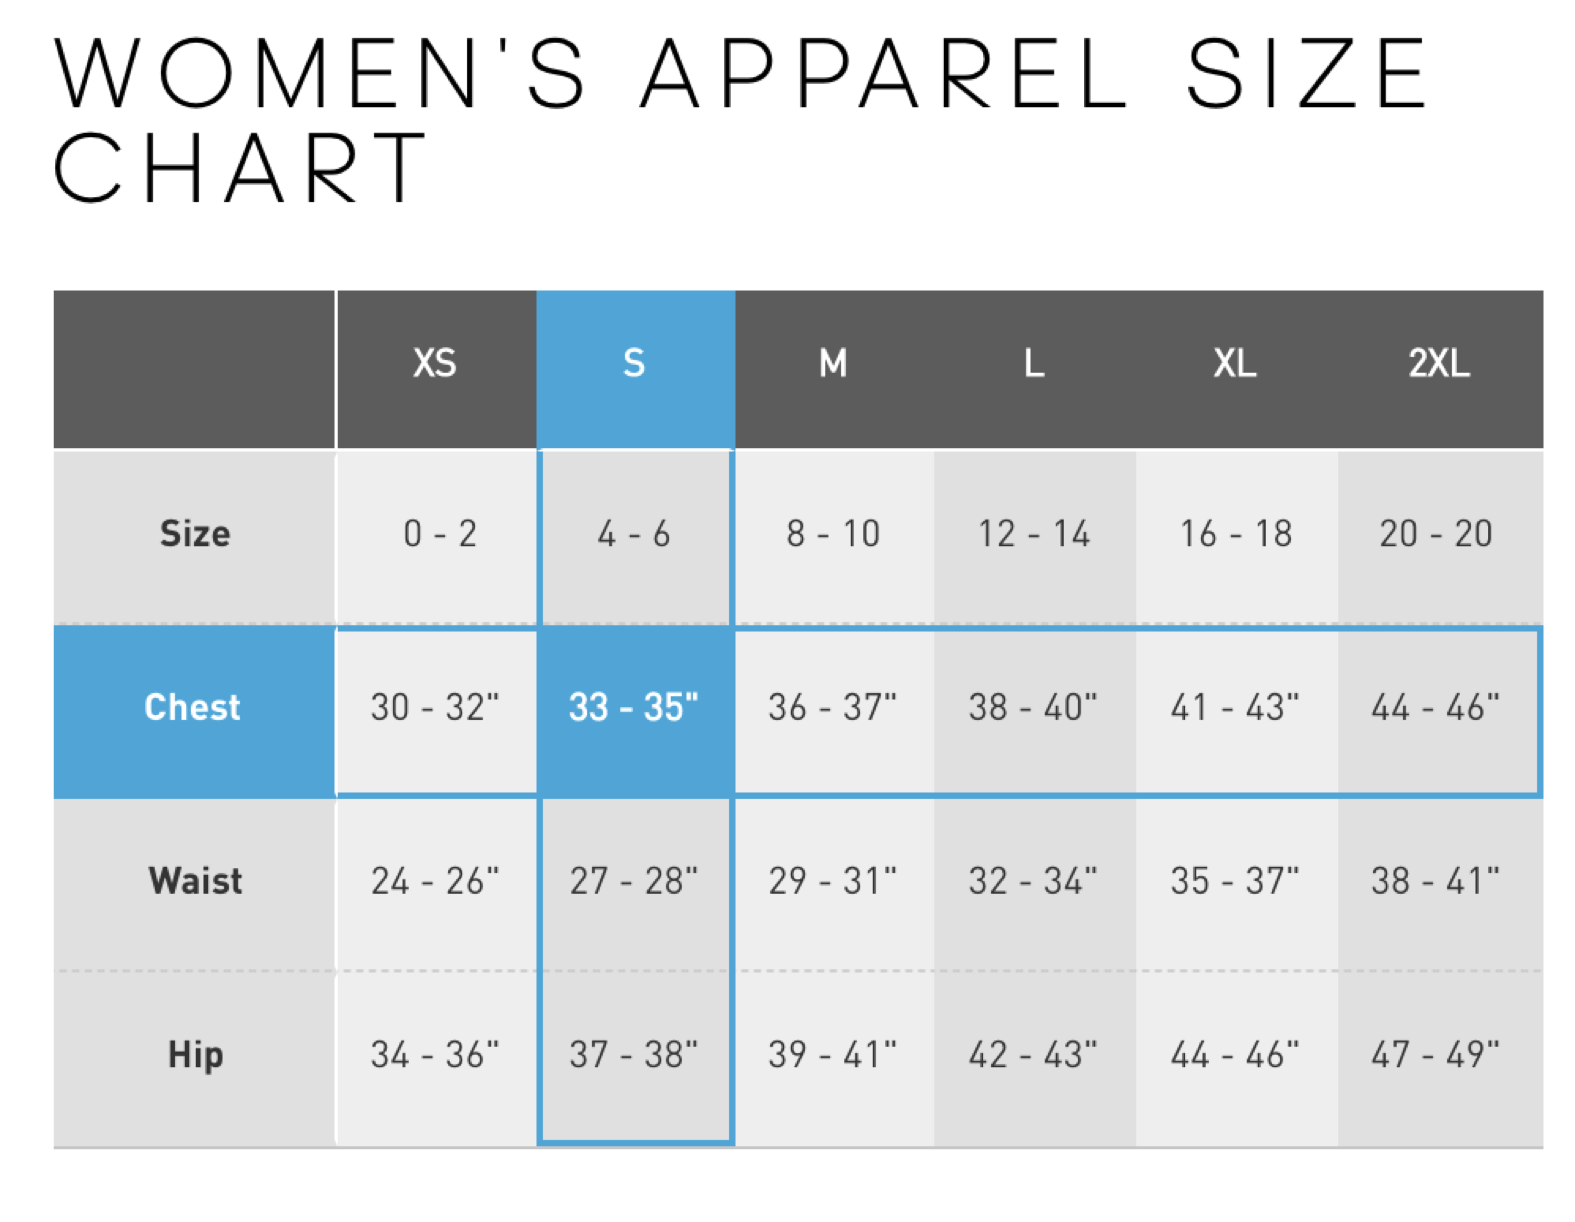 adidas women's apparel size chart